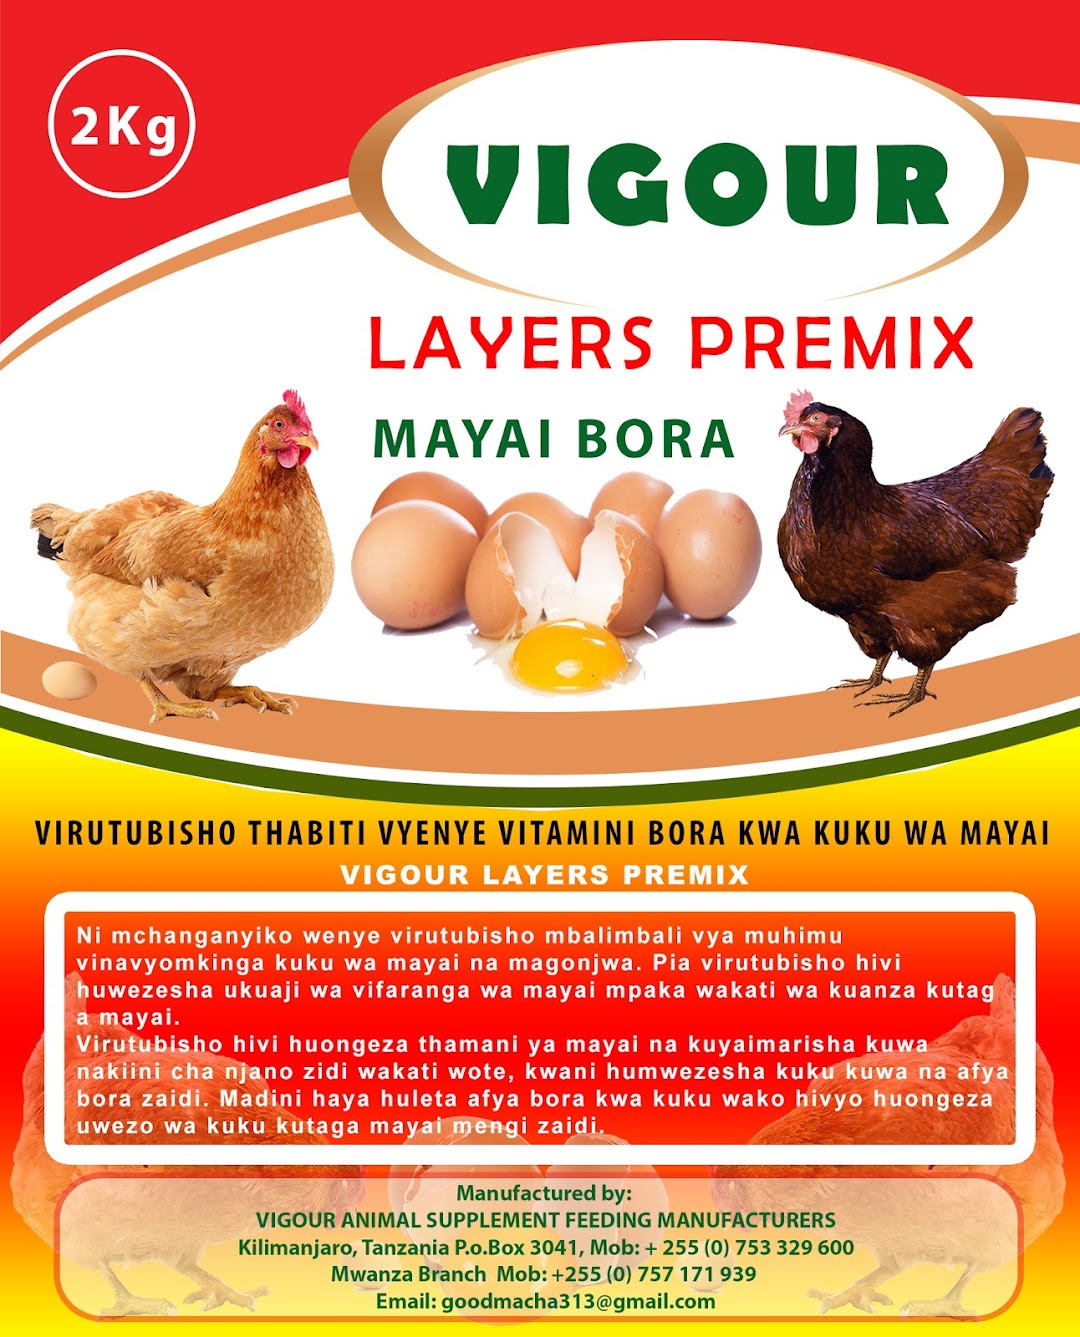 Vigour Animal Supplement Feeding Manufacturers